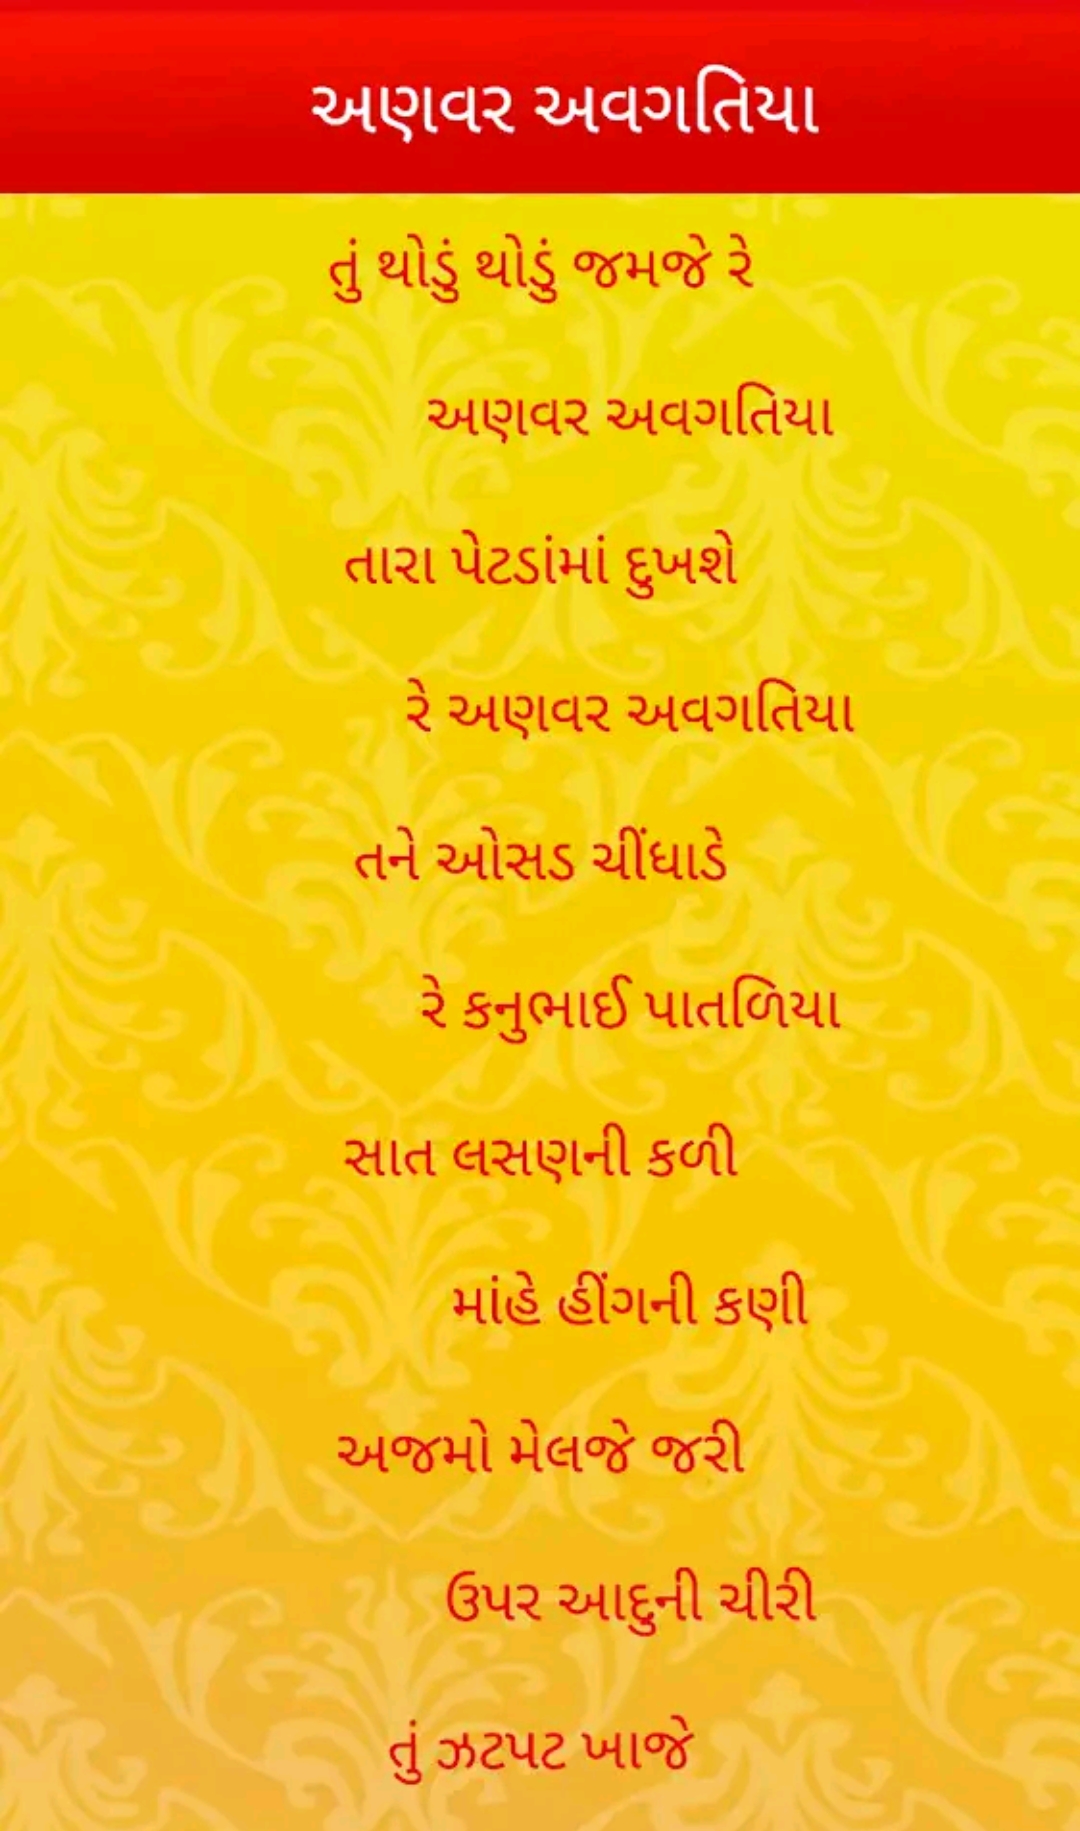 Anjali geet in gujarati lyrics